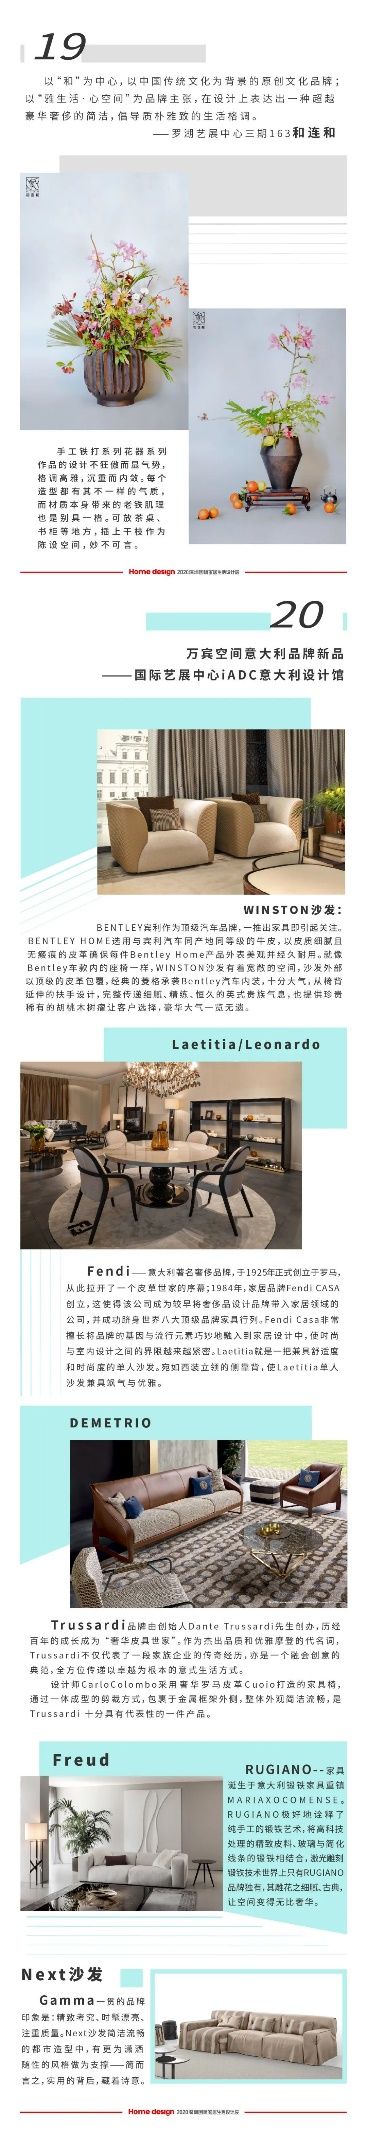 Home Design新品提前知丨2020深圳国际家居生活设计展最in设计新品大赏